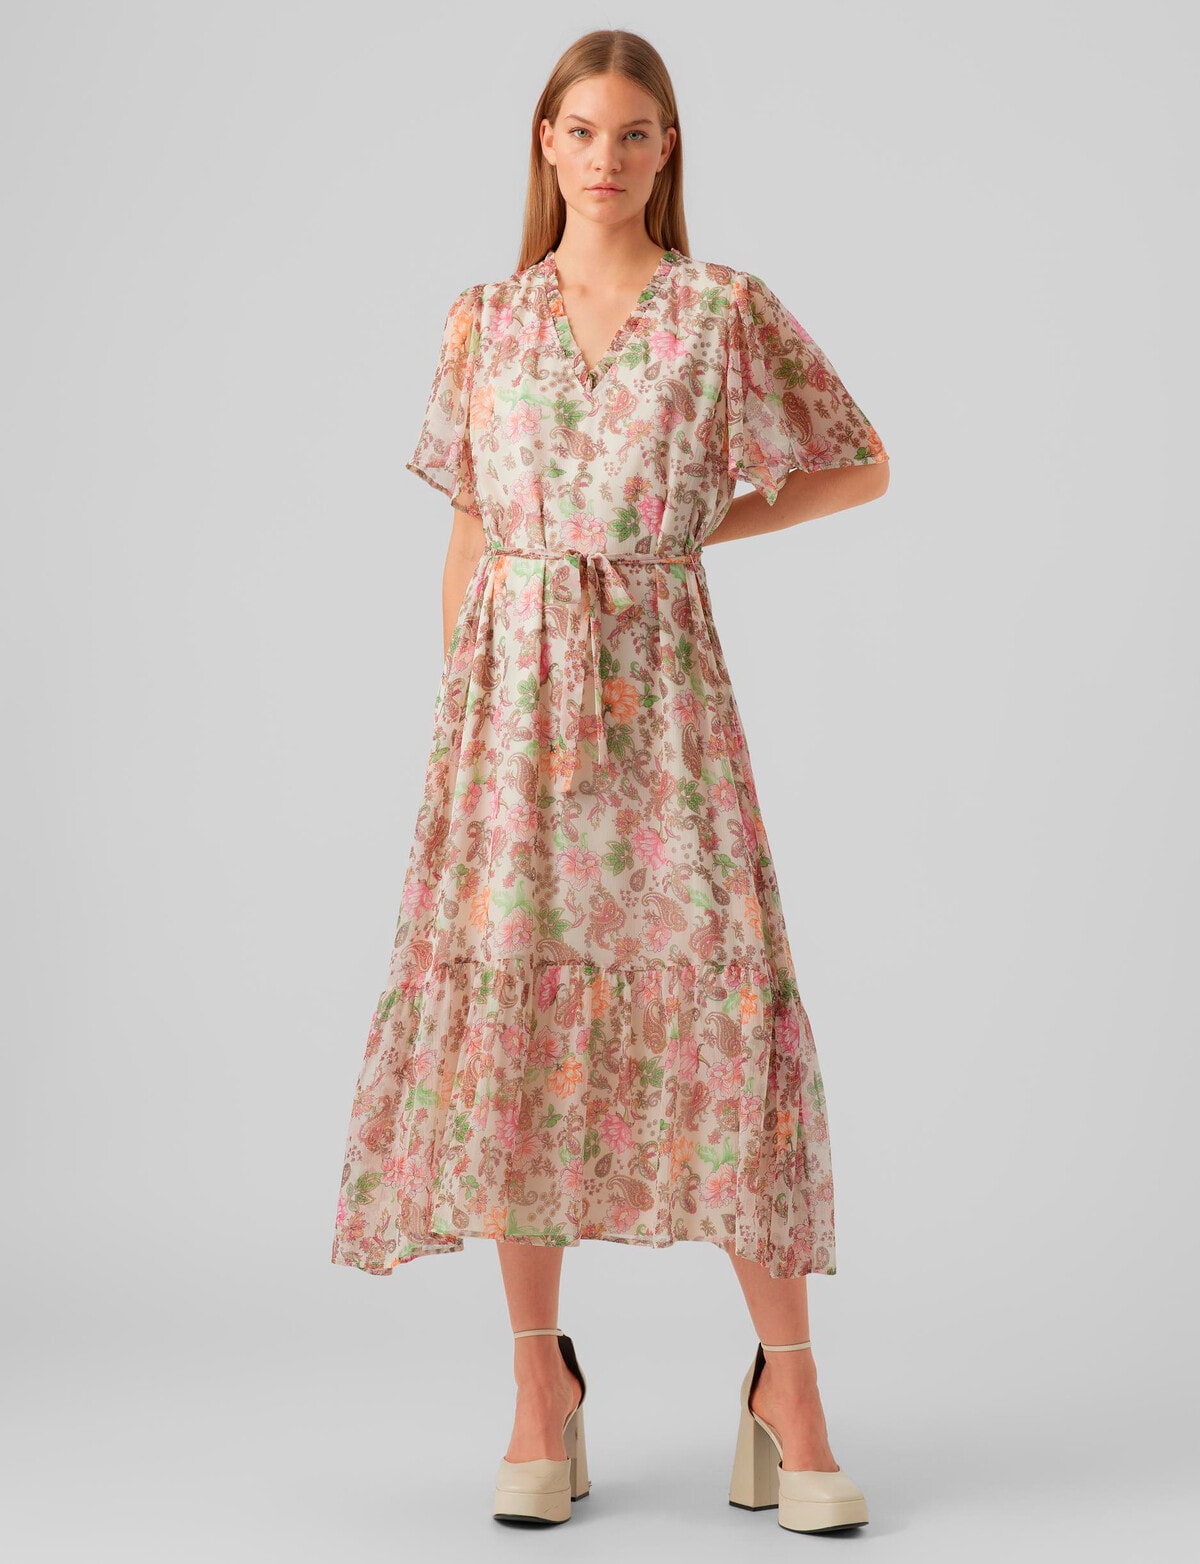 Vero Moda Silo 7/8 Sleeve Dress, Birch - Dresses